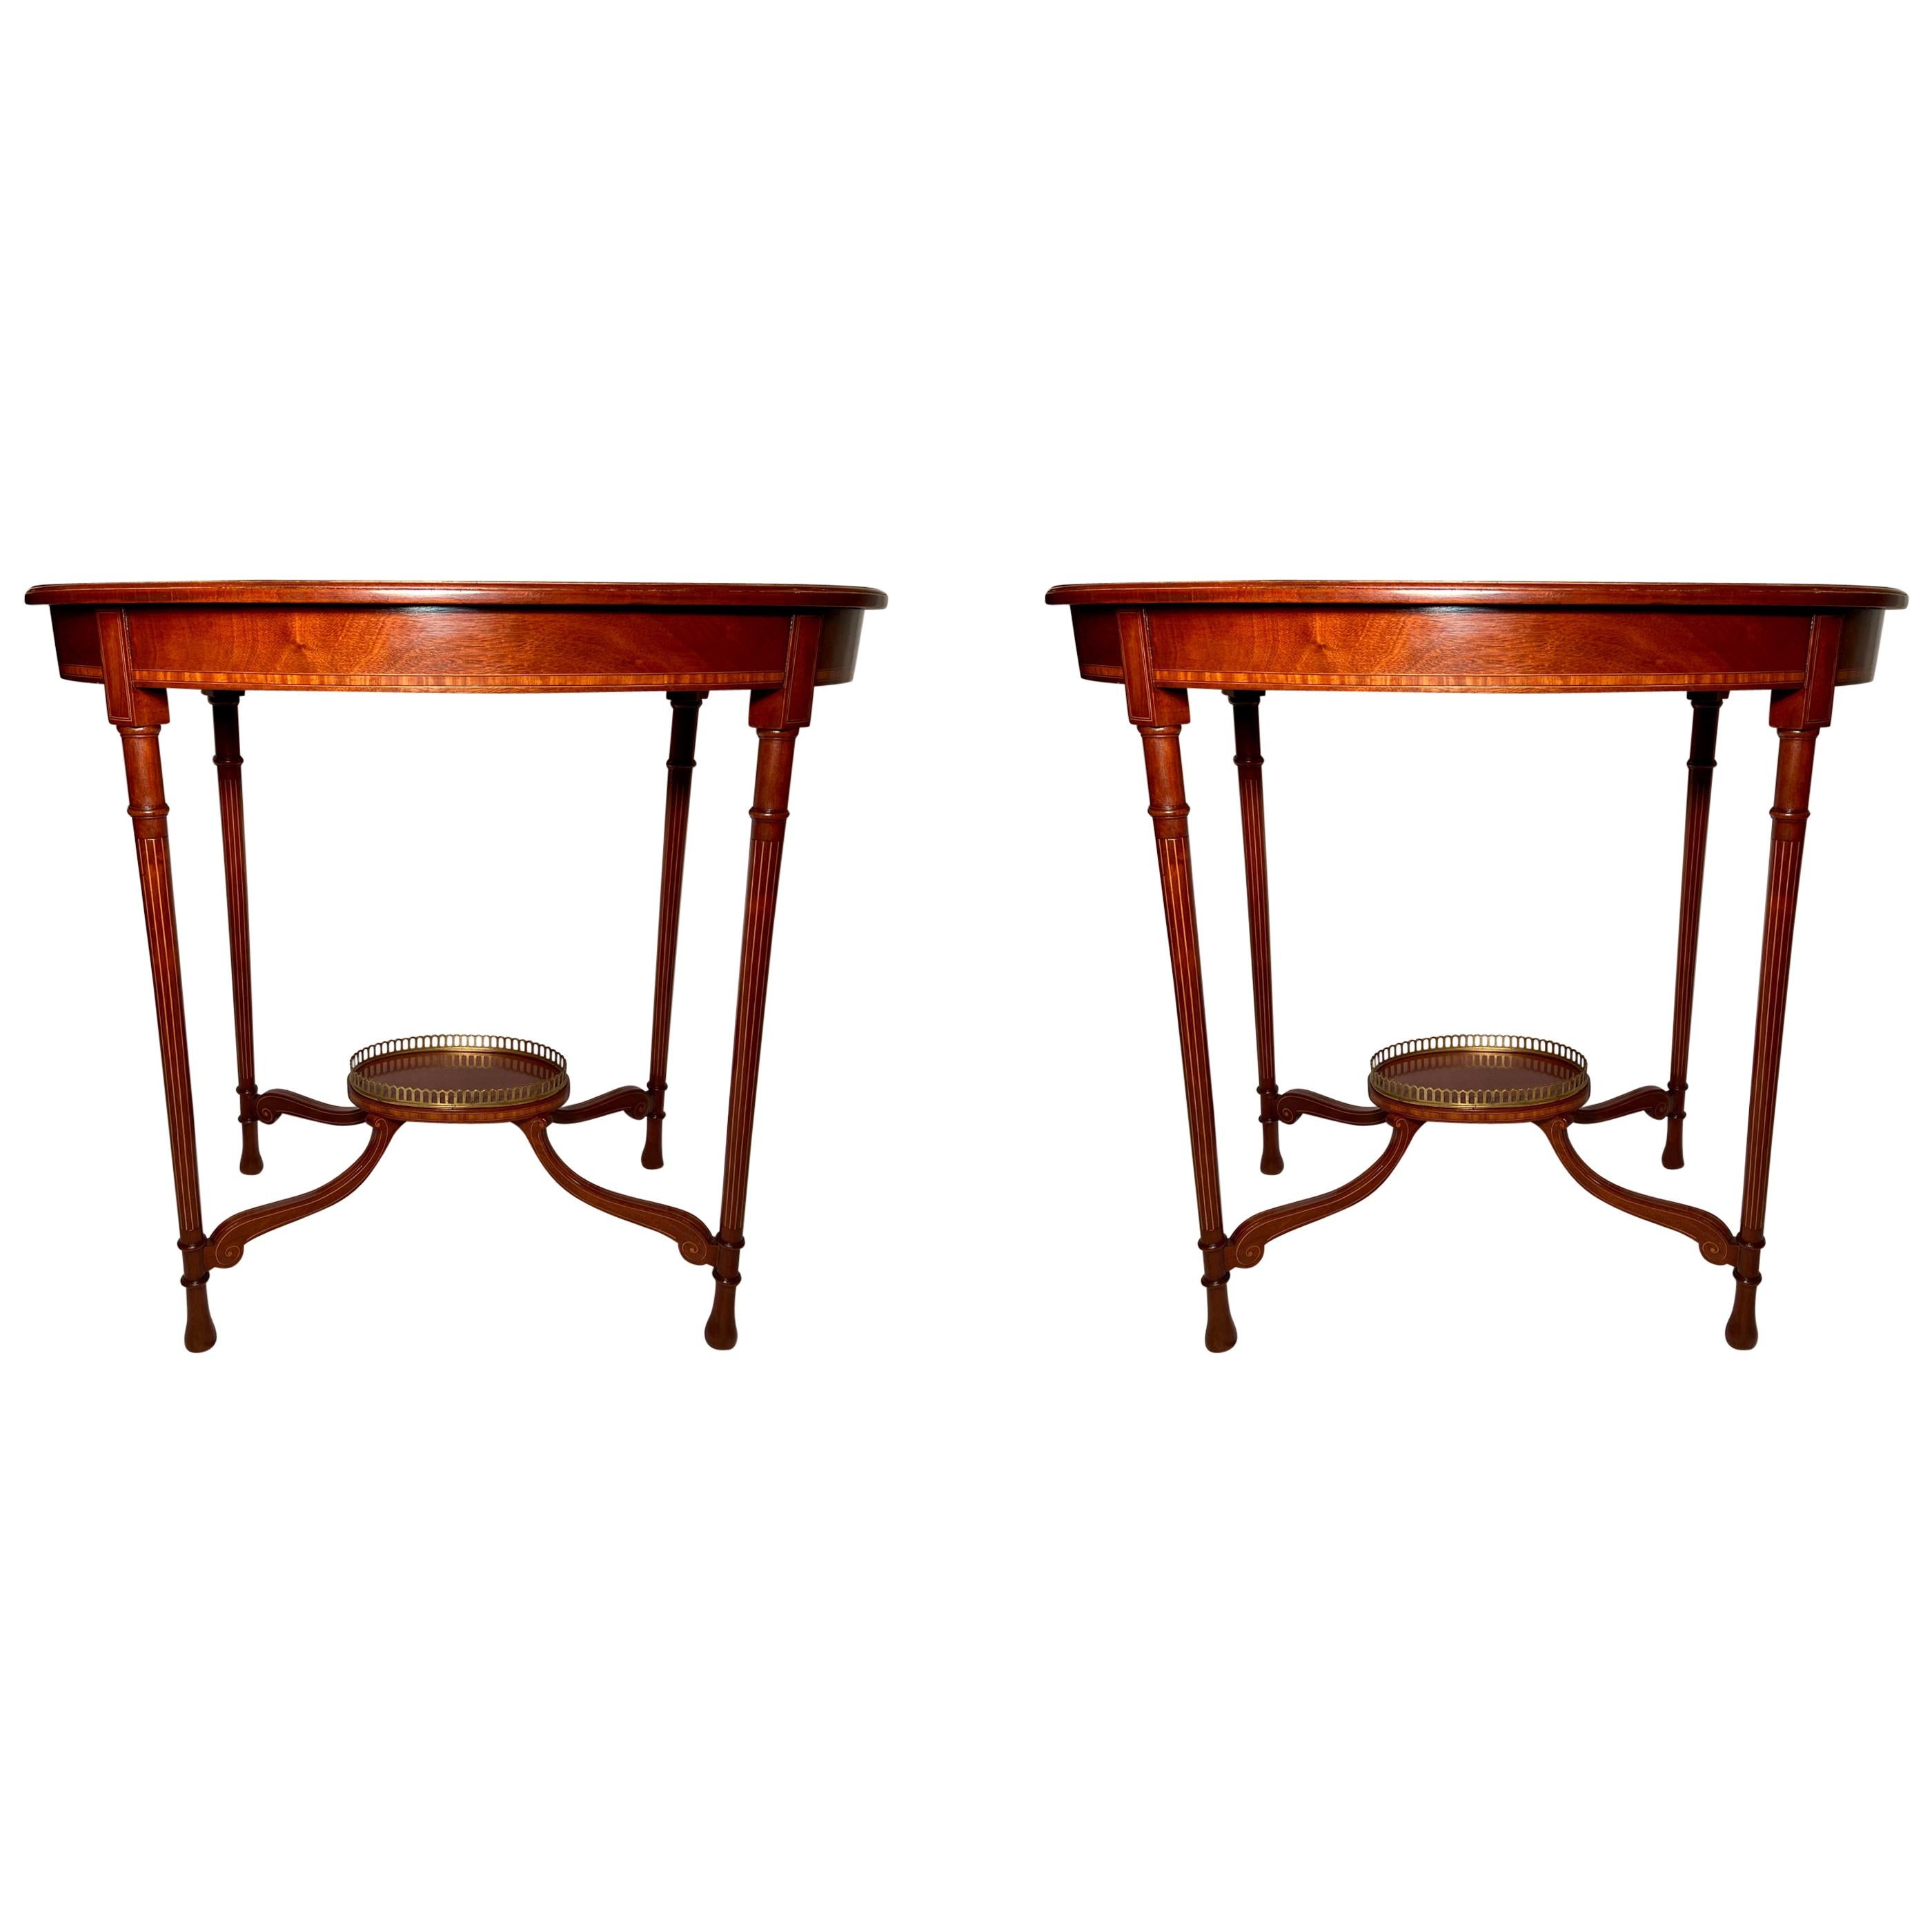 Pair of Antique English Mahogany Occasional Tables, circa 1880